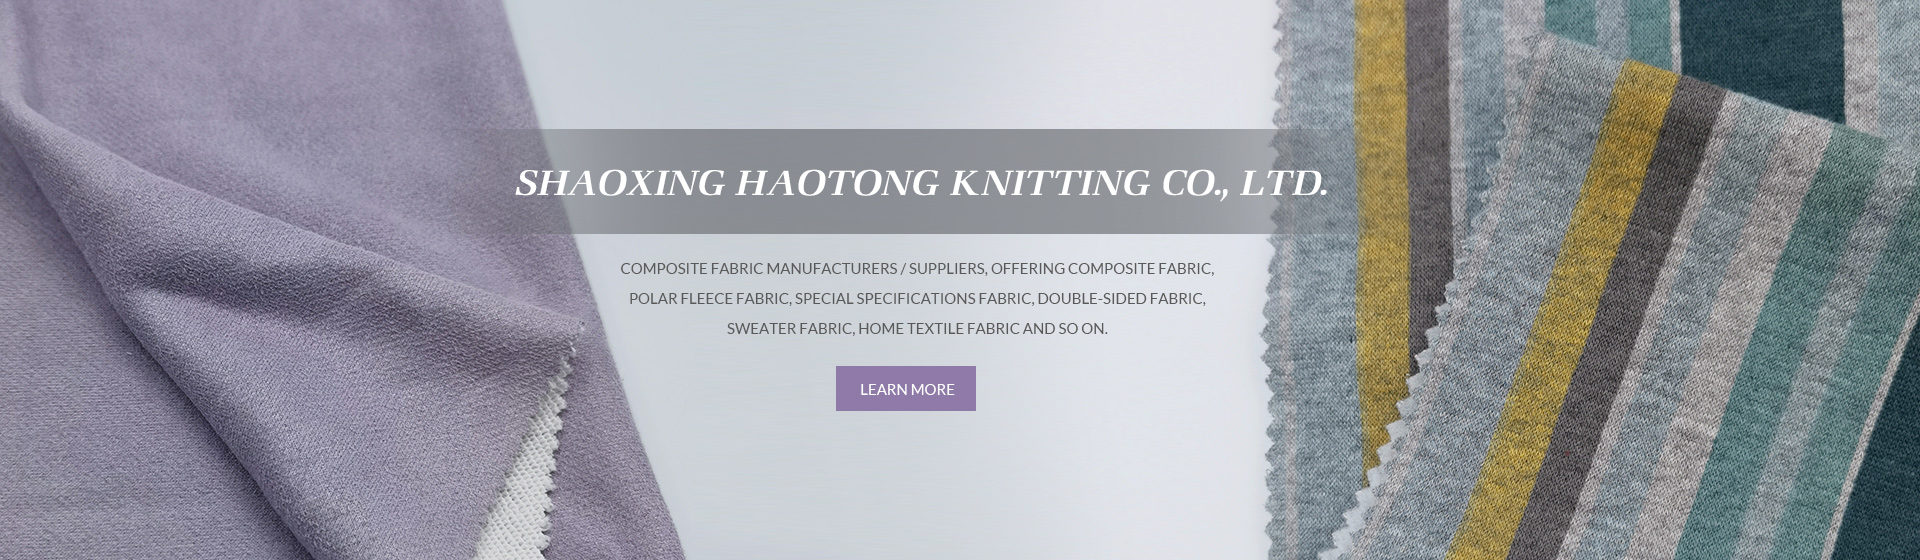 Shaoxing Haotong Knitting Co., Ltd. 